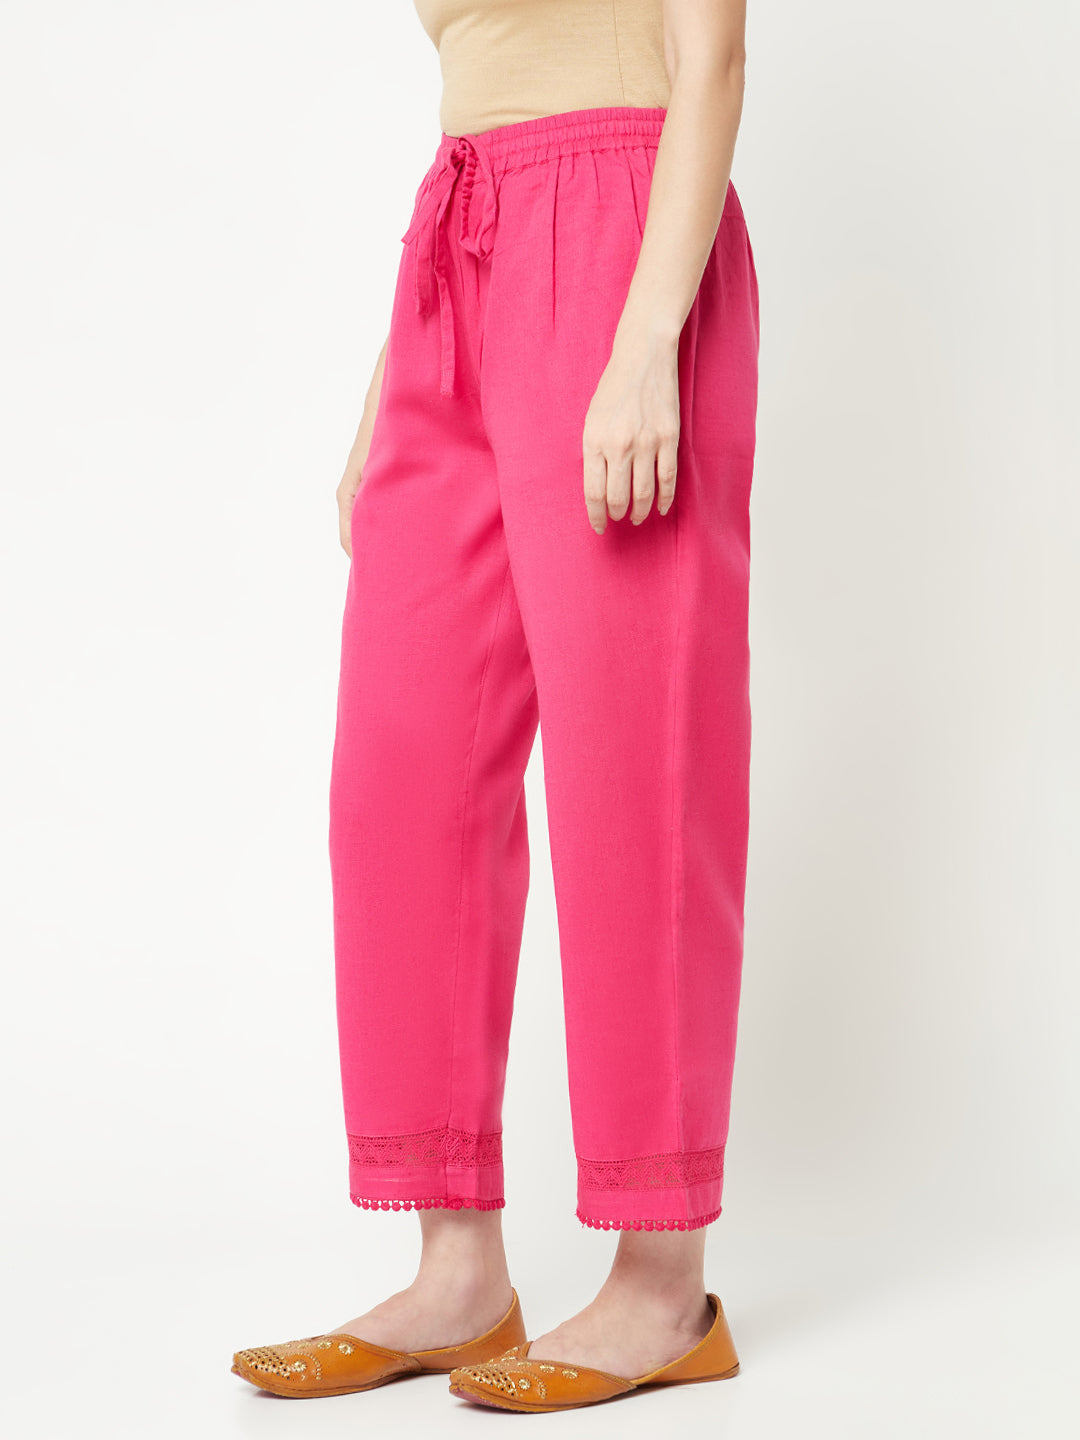 Pink Straight Cotton Pants